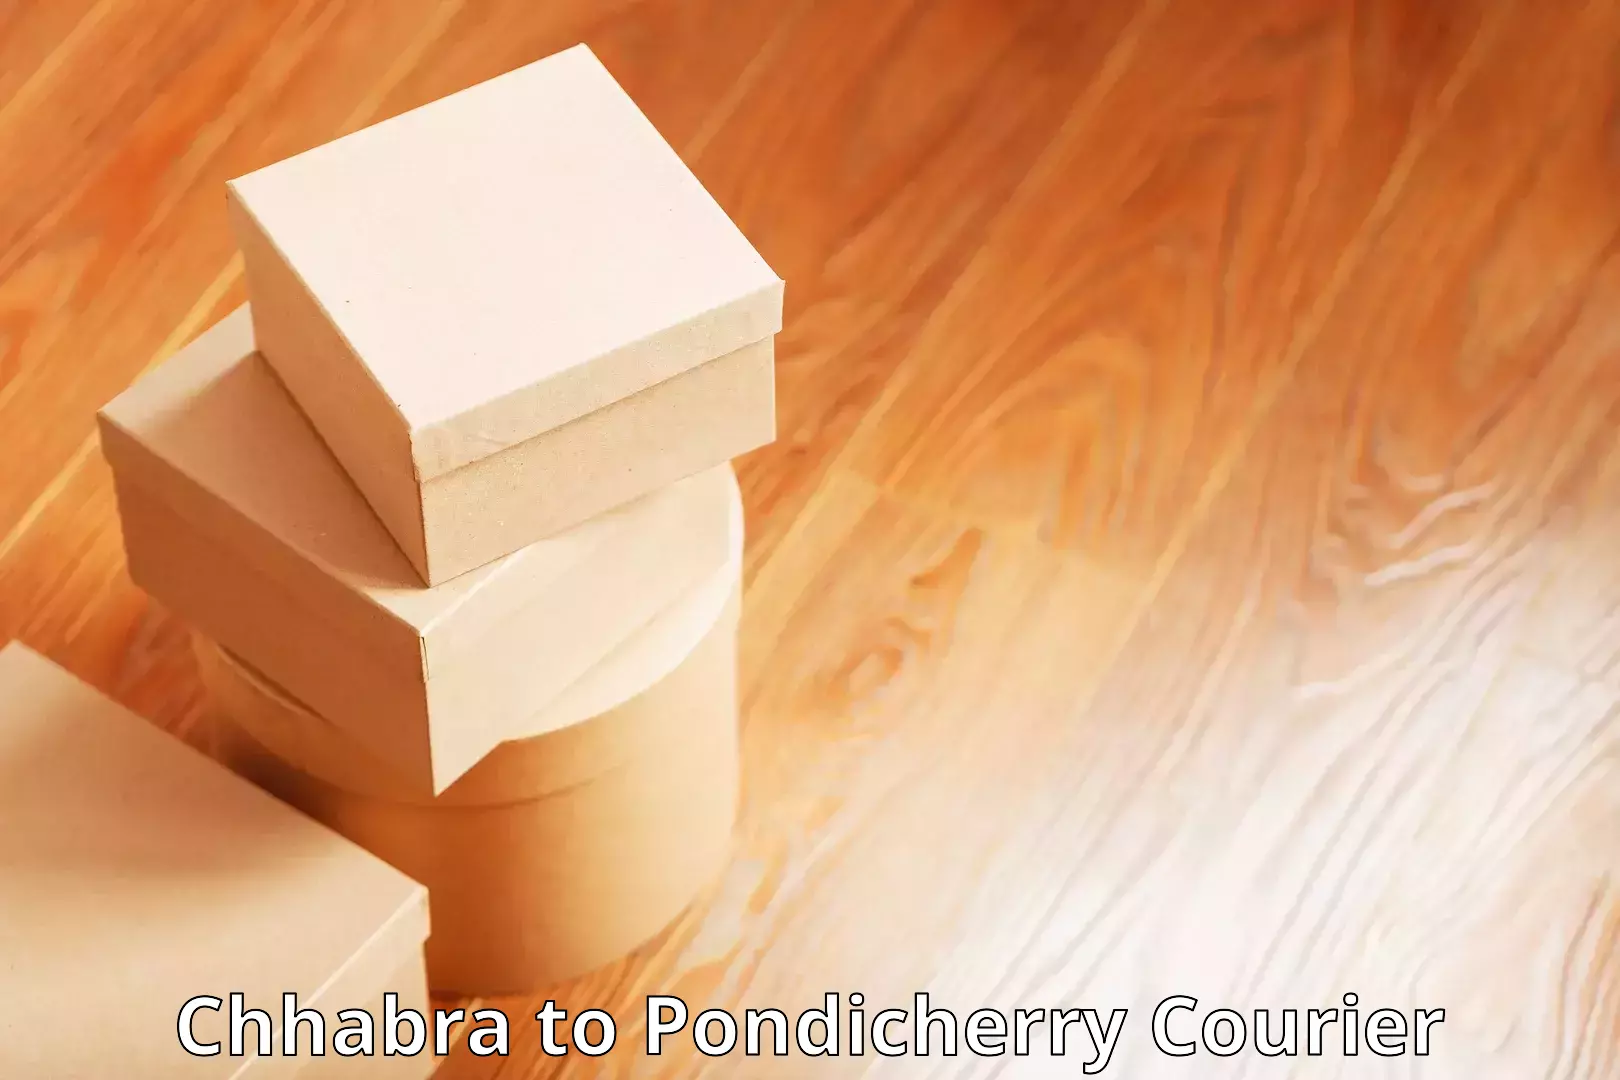 Modern delivery technologies Chhabra to Pondicherry